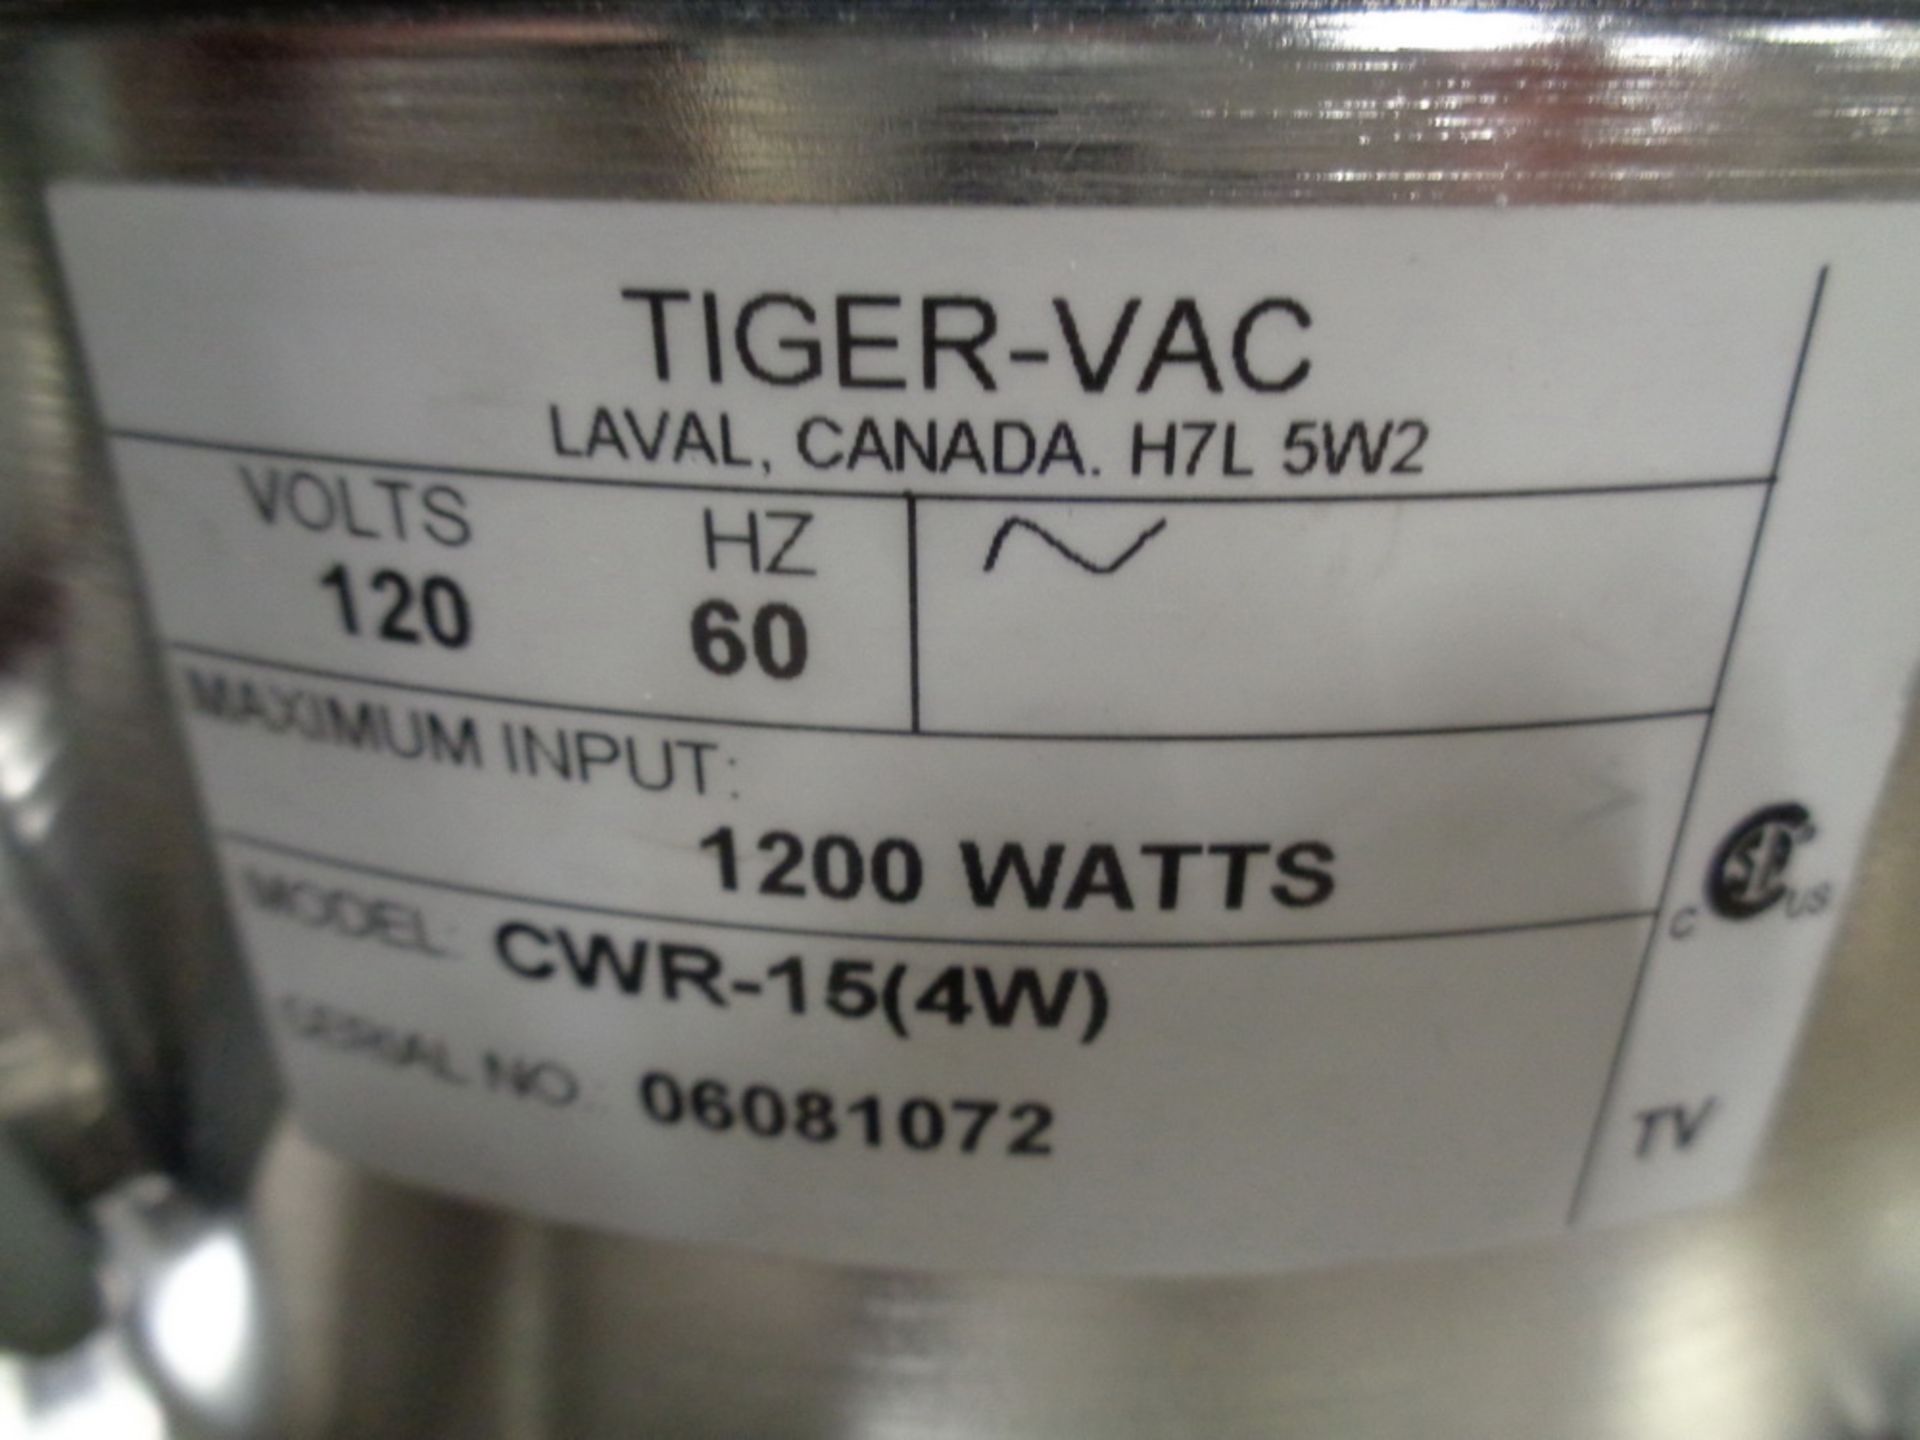 Unused Tiger Cleanroom Vacuum , 1200 watts, Model CWR-15 (4w) - Image 5 of 5